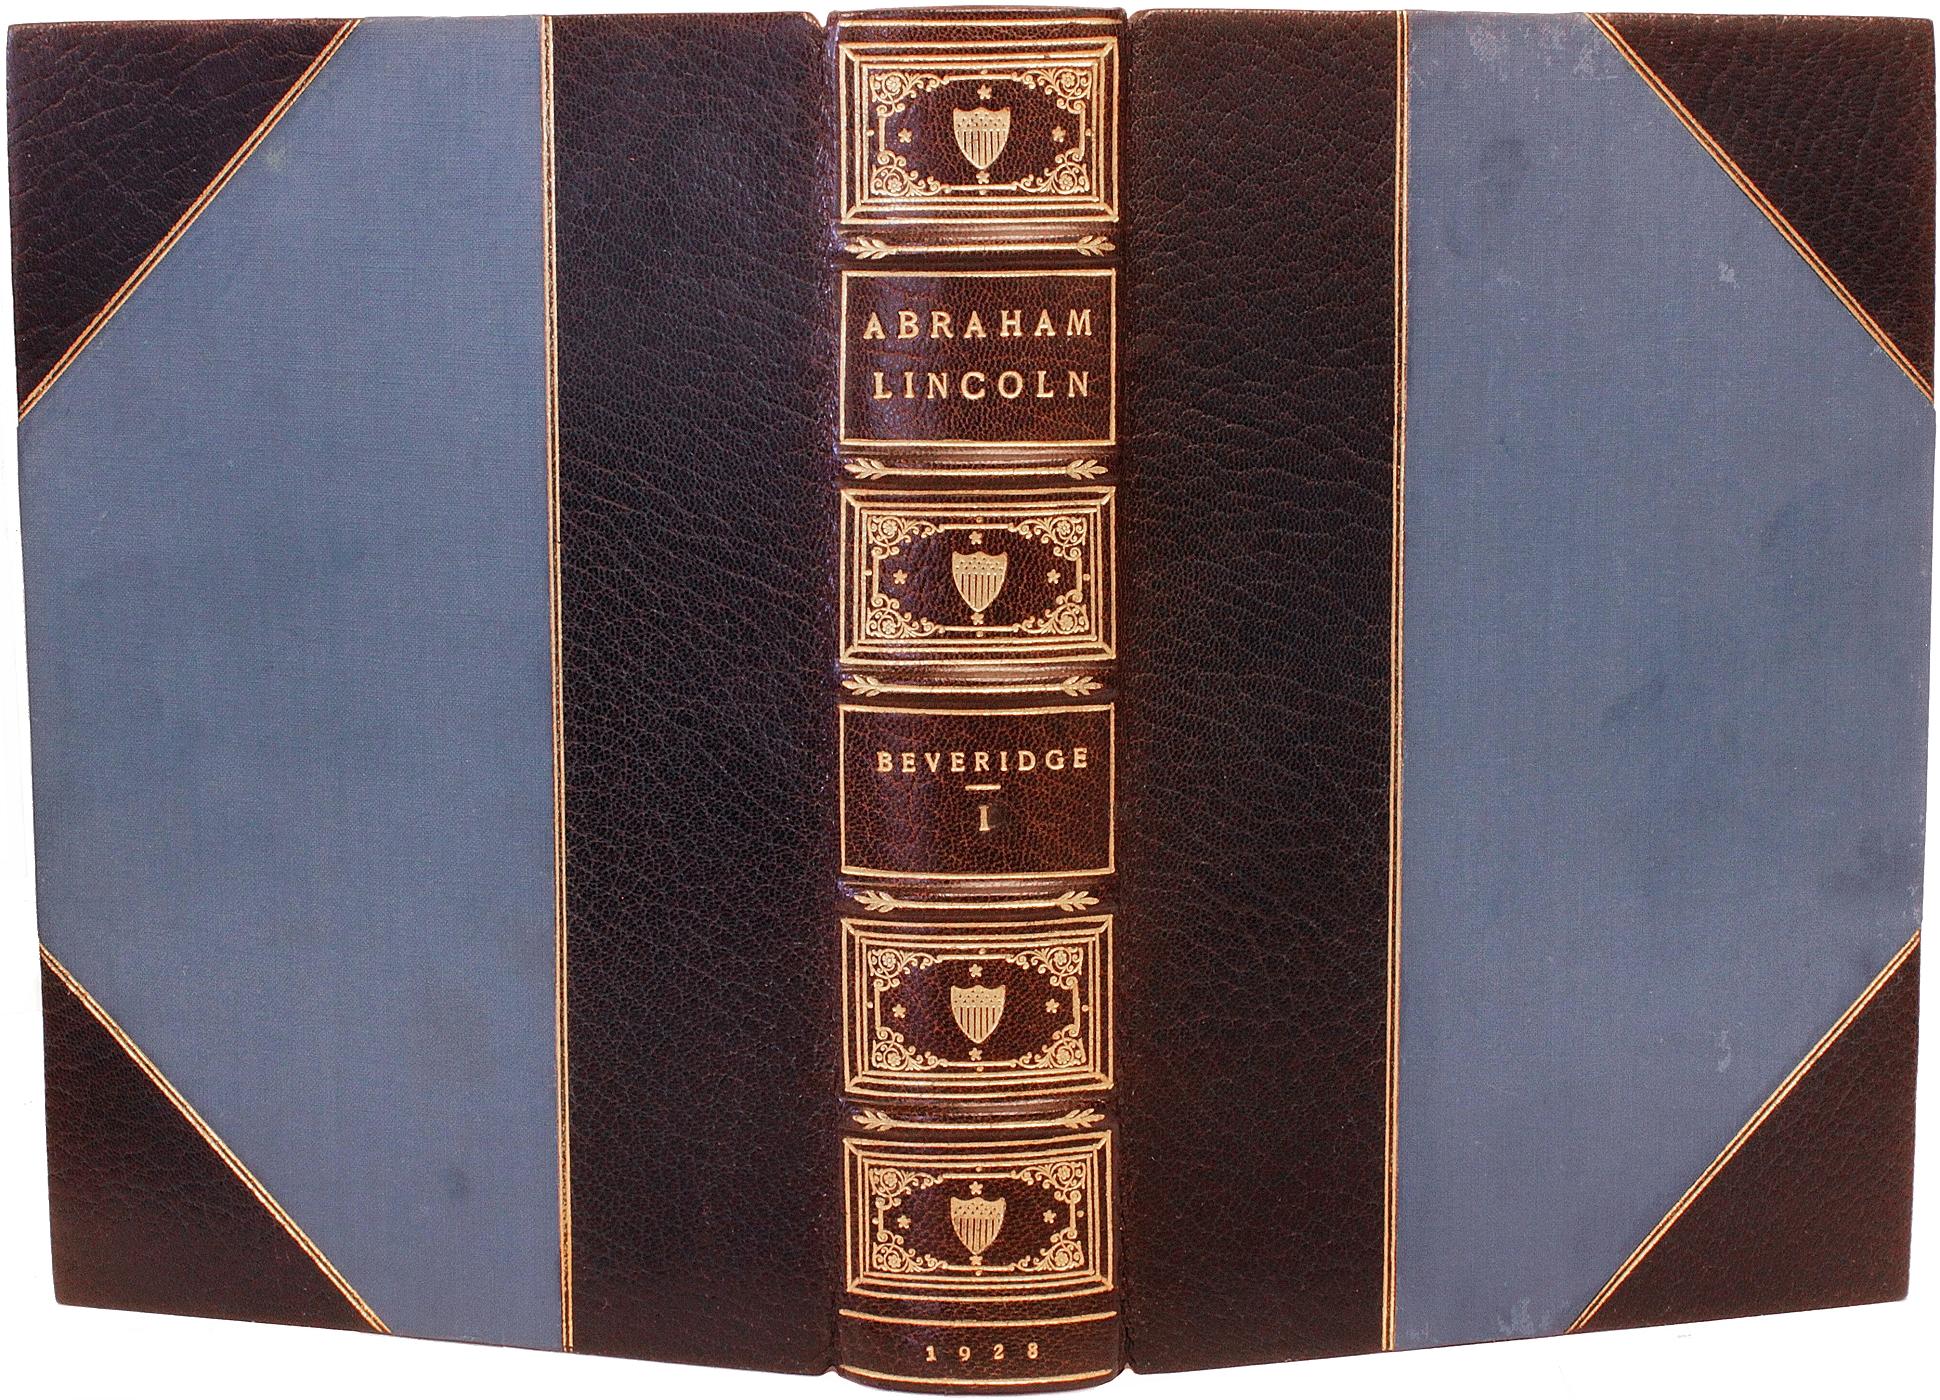 AUTHOR: BEVERIDGE, Albert J. 

TITLE: Abraham Lincoln 1809-1858.

PUBLISHER: Boston: Houghton Mifflin Company, 1928.

DESCRIPTION: FIRST EDITION. 2 vols., 9-5/8